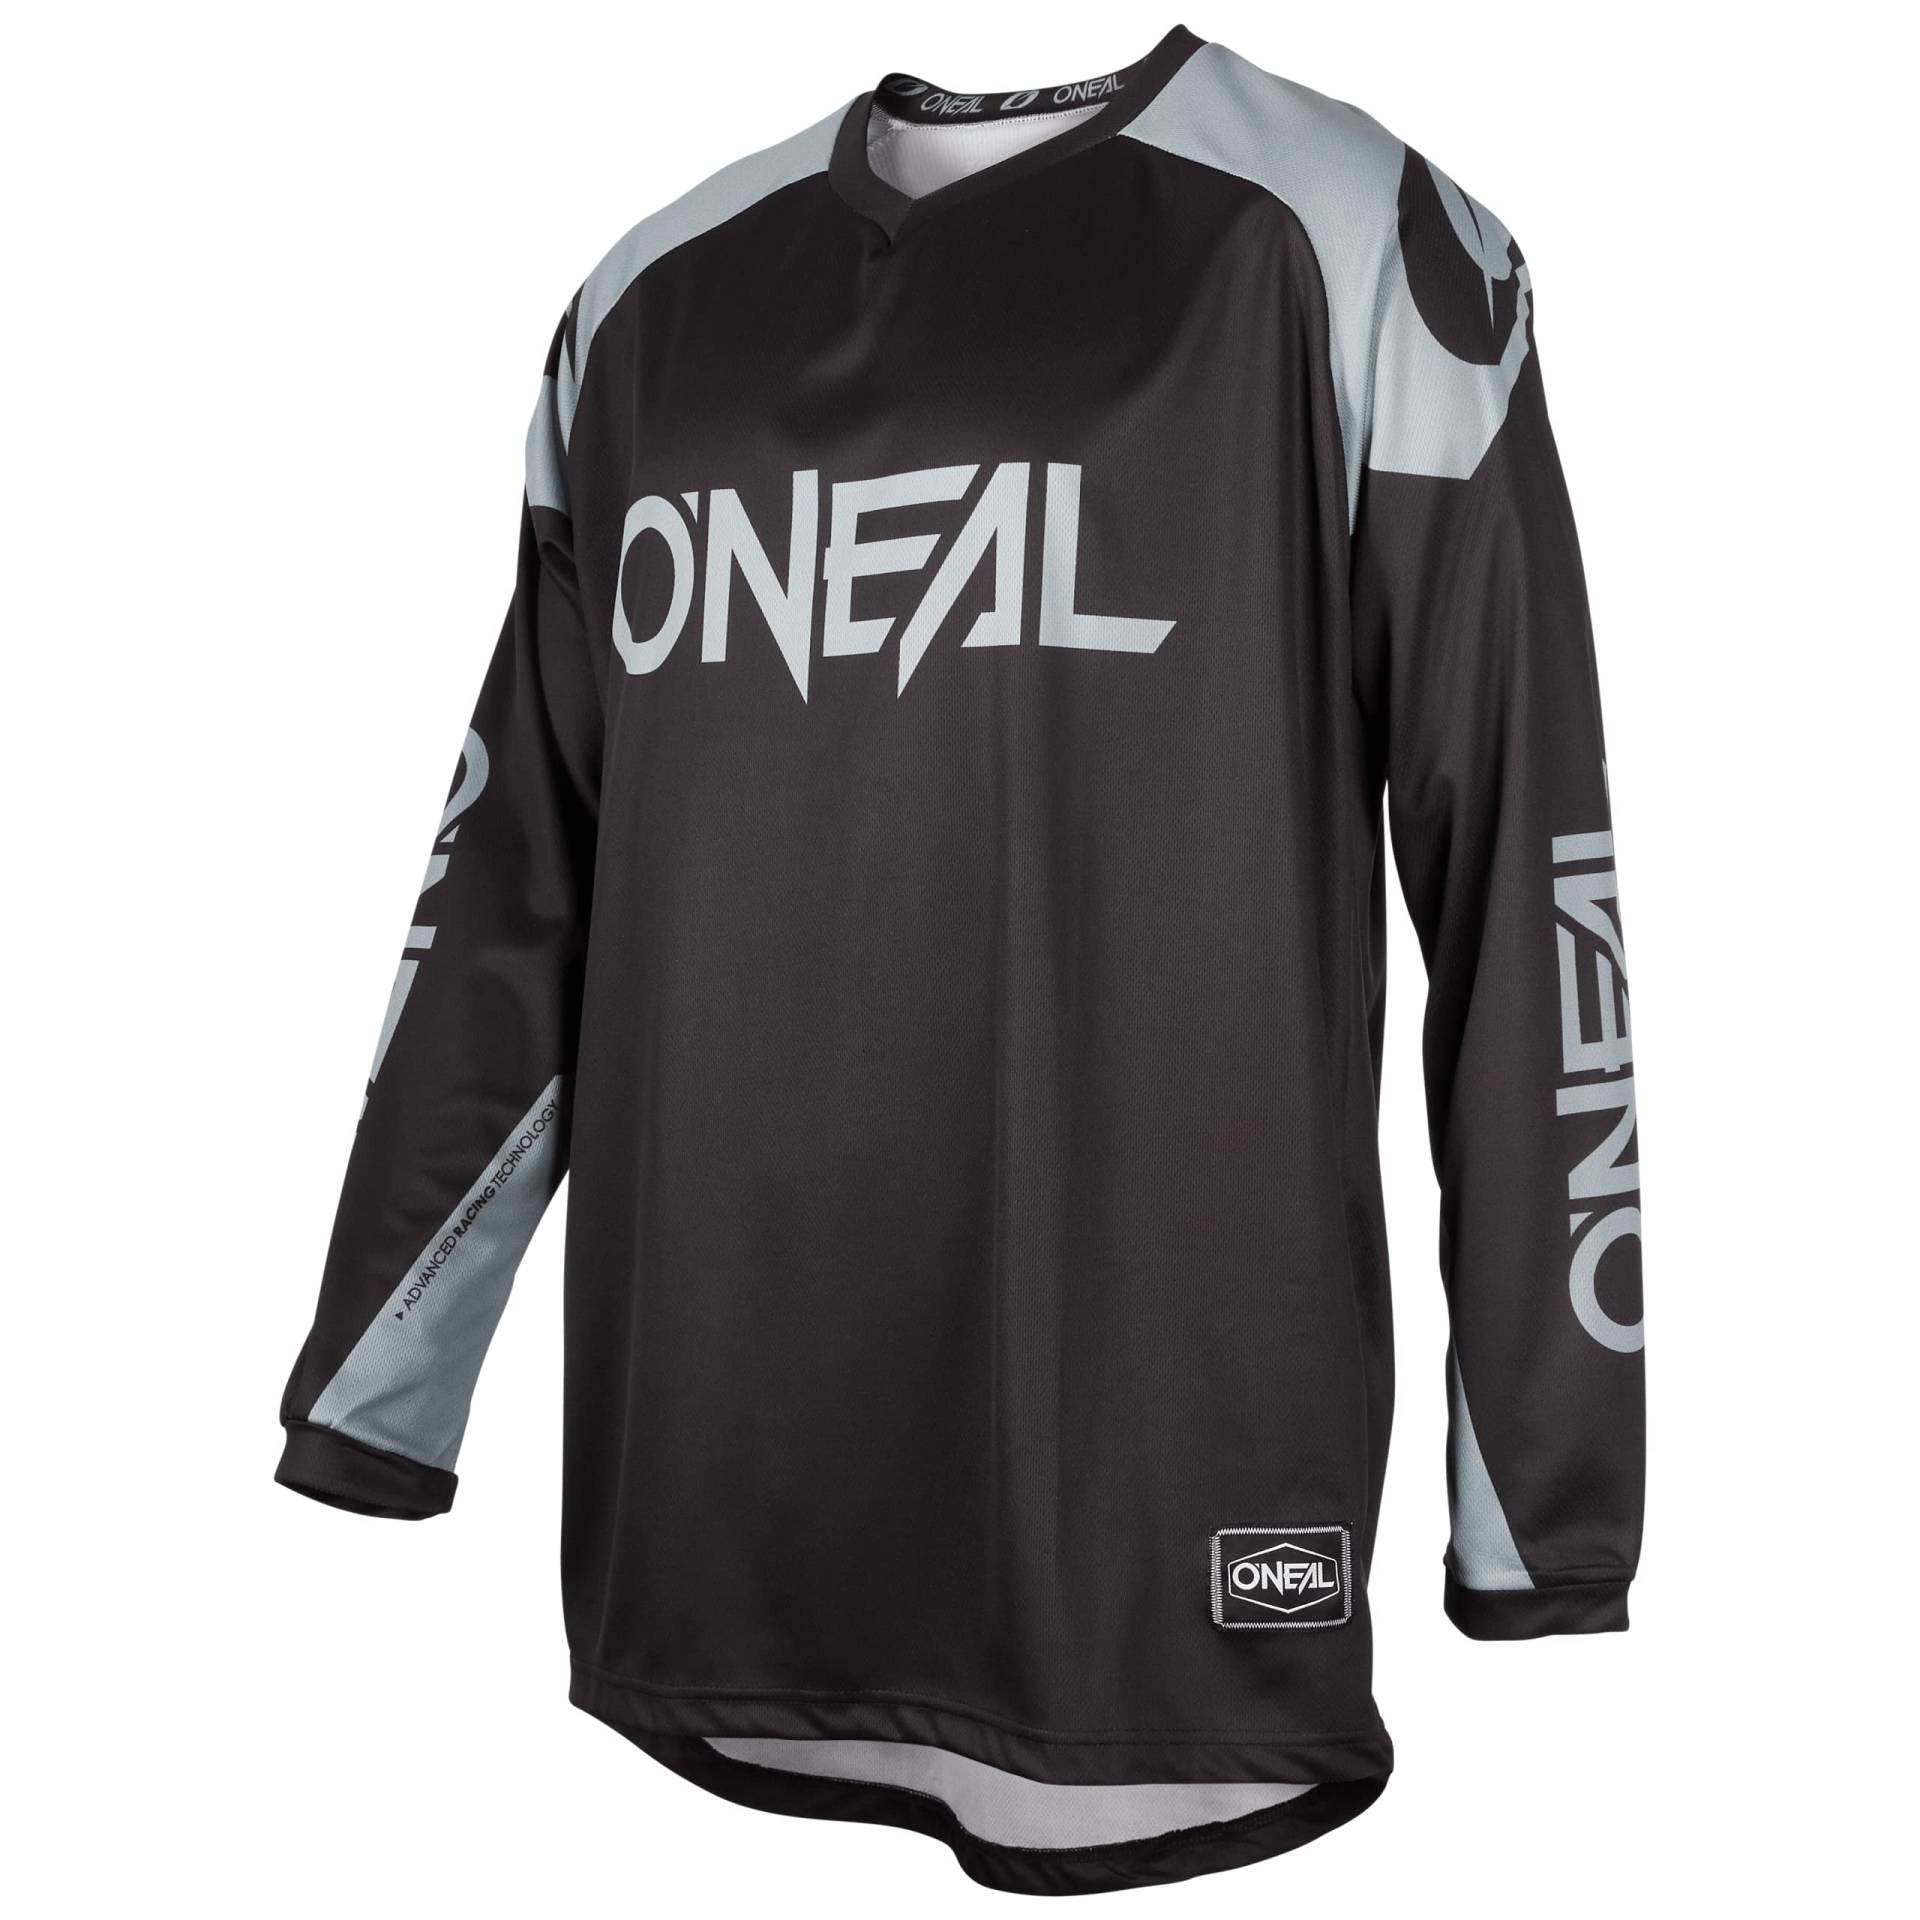 O'NEAL | Jersey | Enduro Motocross | Atmungsaktives Material, Maximale Bewegungsfreiheit, Verlängerter Rücken | Jersey Matrix Ridewear | Erwachsene | Schwarz Grau | Größe XL von O'NEAL